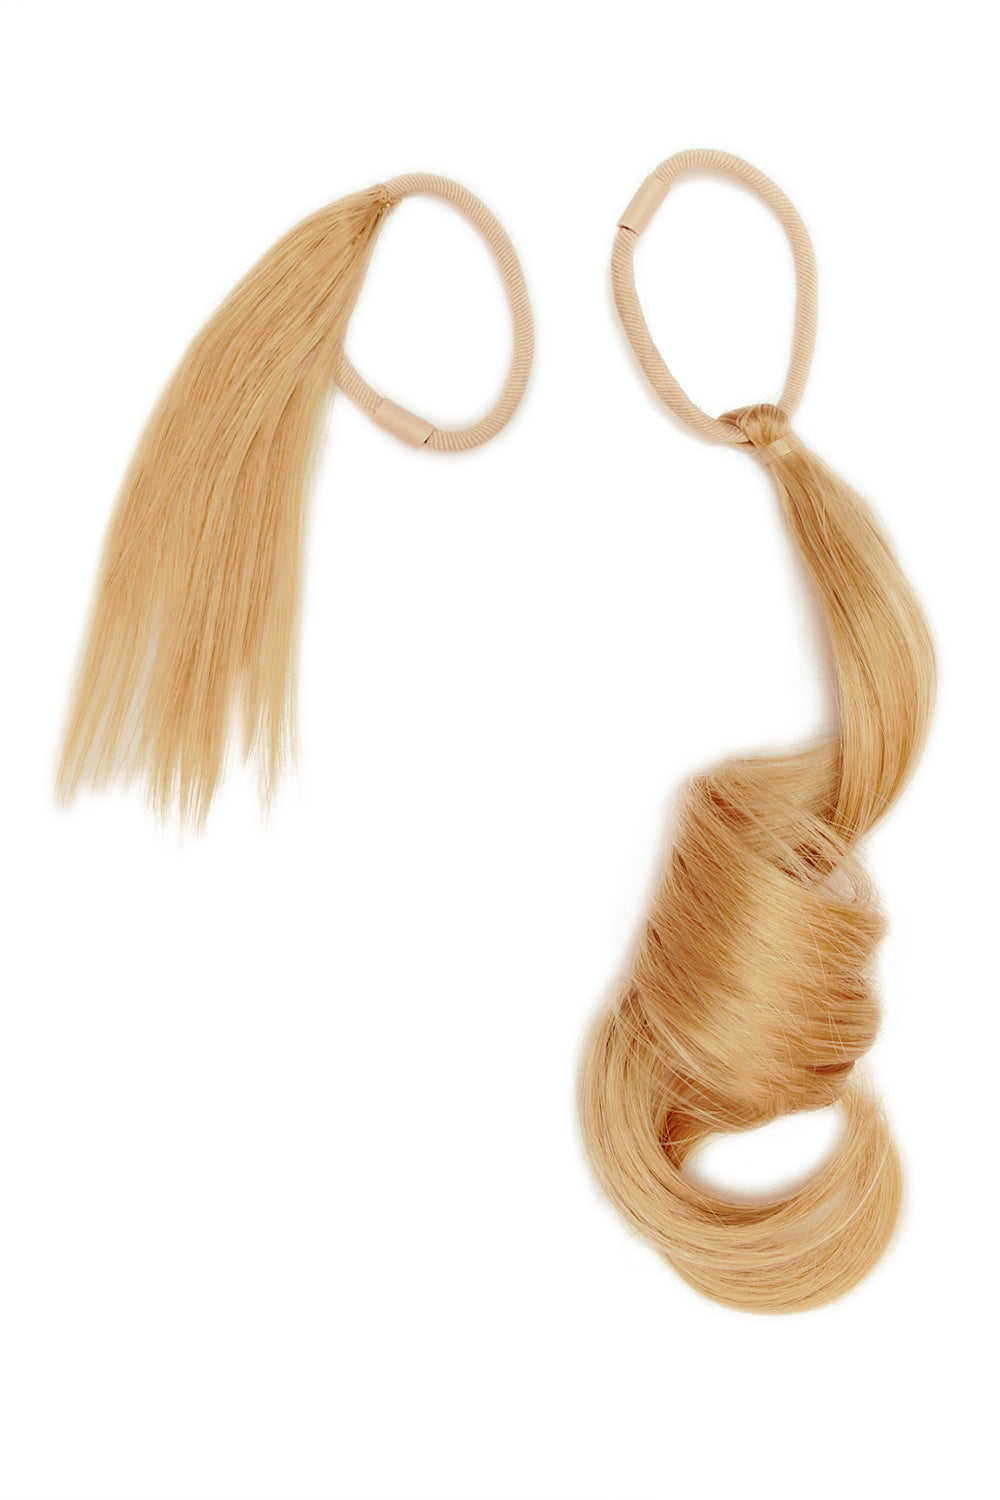 Feathered Bun Booster - Caramel Blonde Festival Hair Inspiration